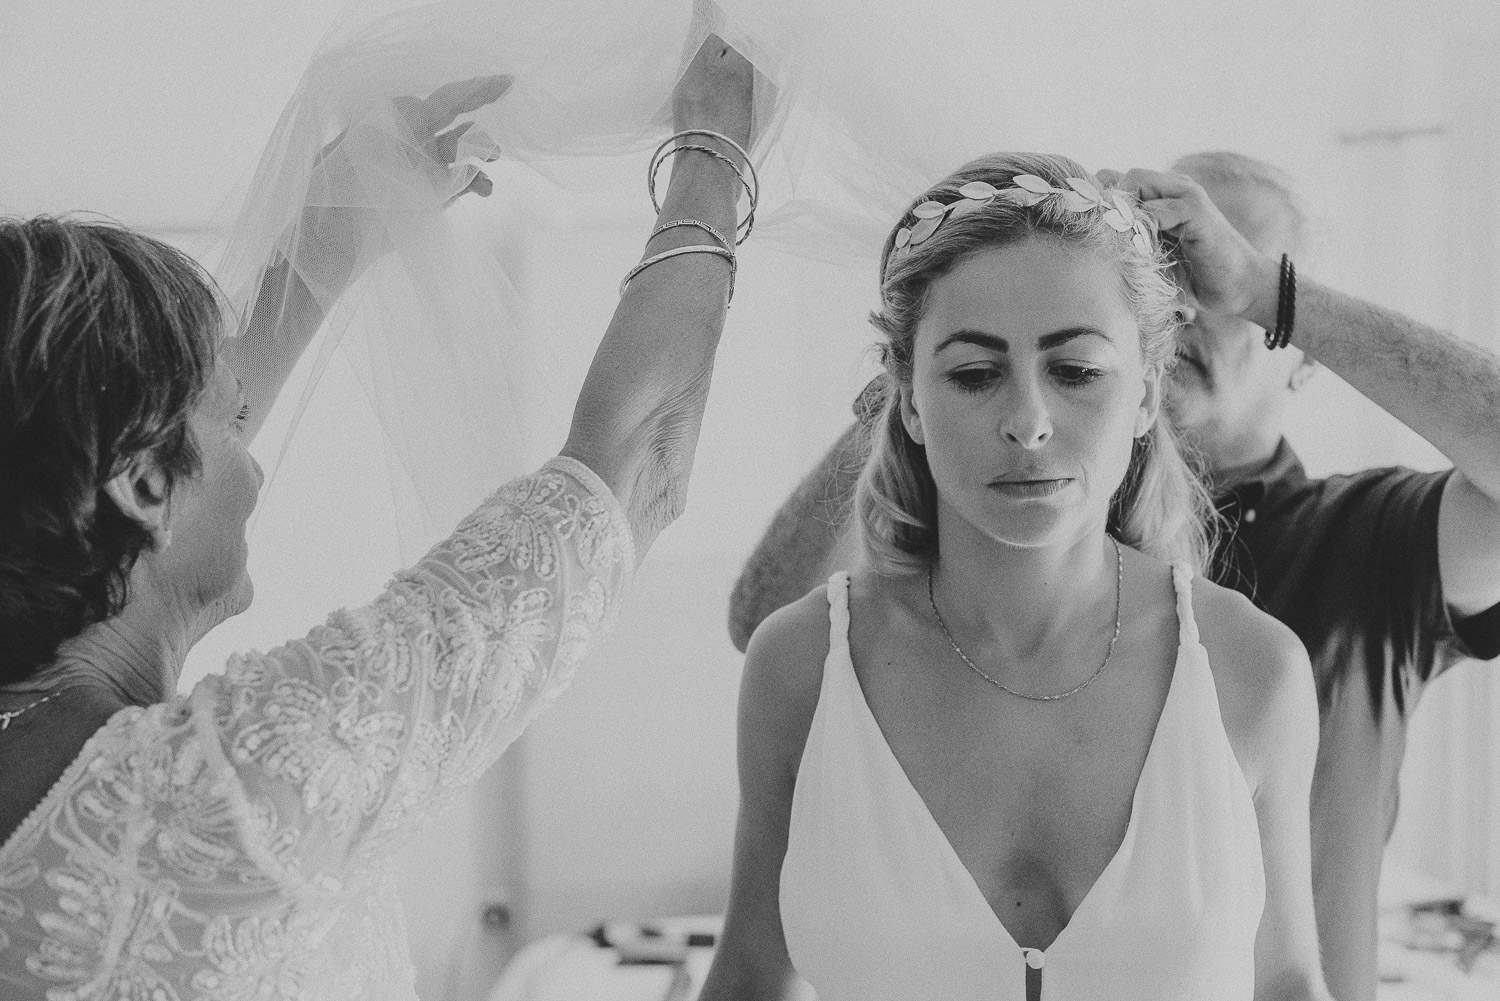 Wedding photographer Mykonos: veil and bride for Mykonos wedding.